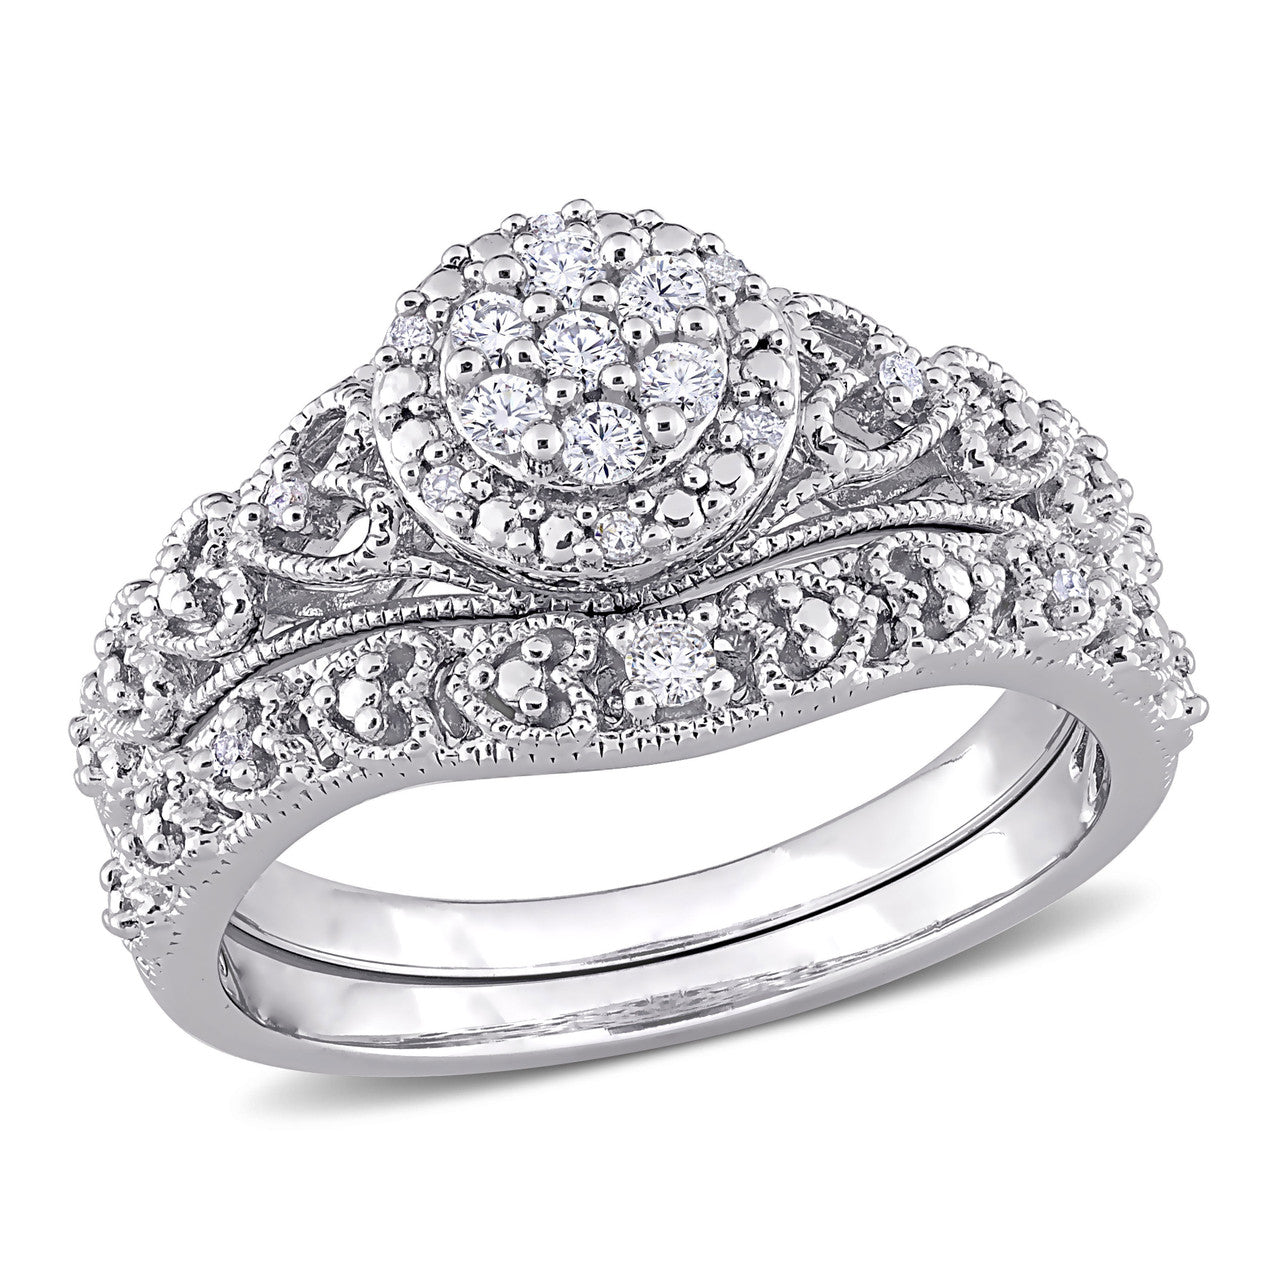 Ice Jewellery 1/5 CT TDW Diamond Bridal Set Ring in Sterling Silver - 75000005414 | Ice Jewellery Australia